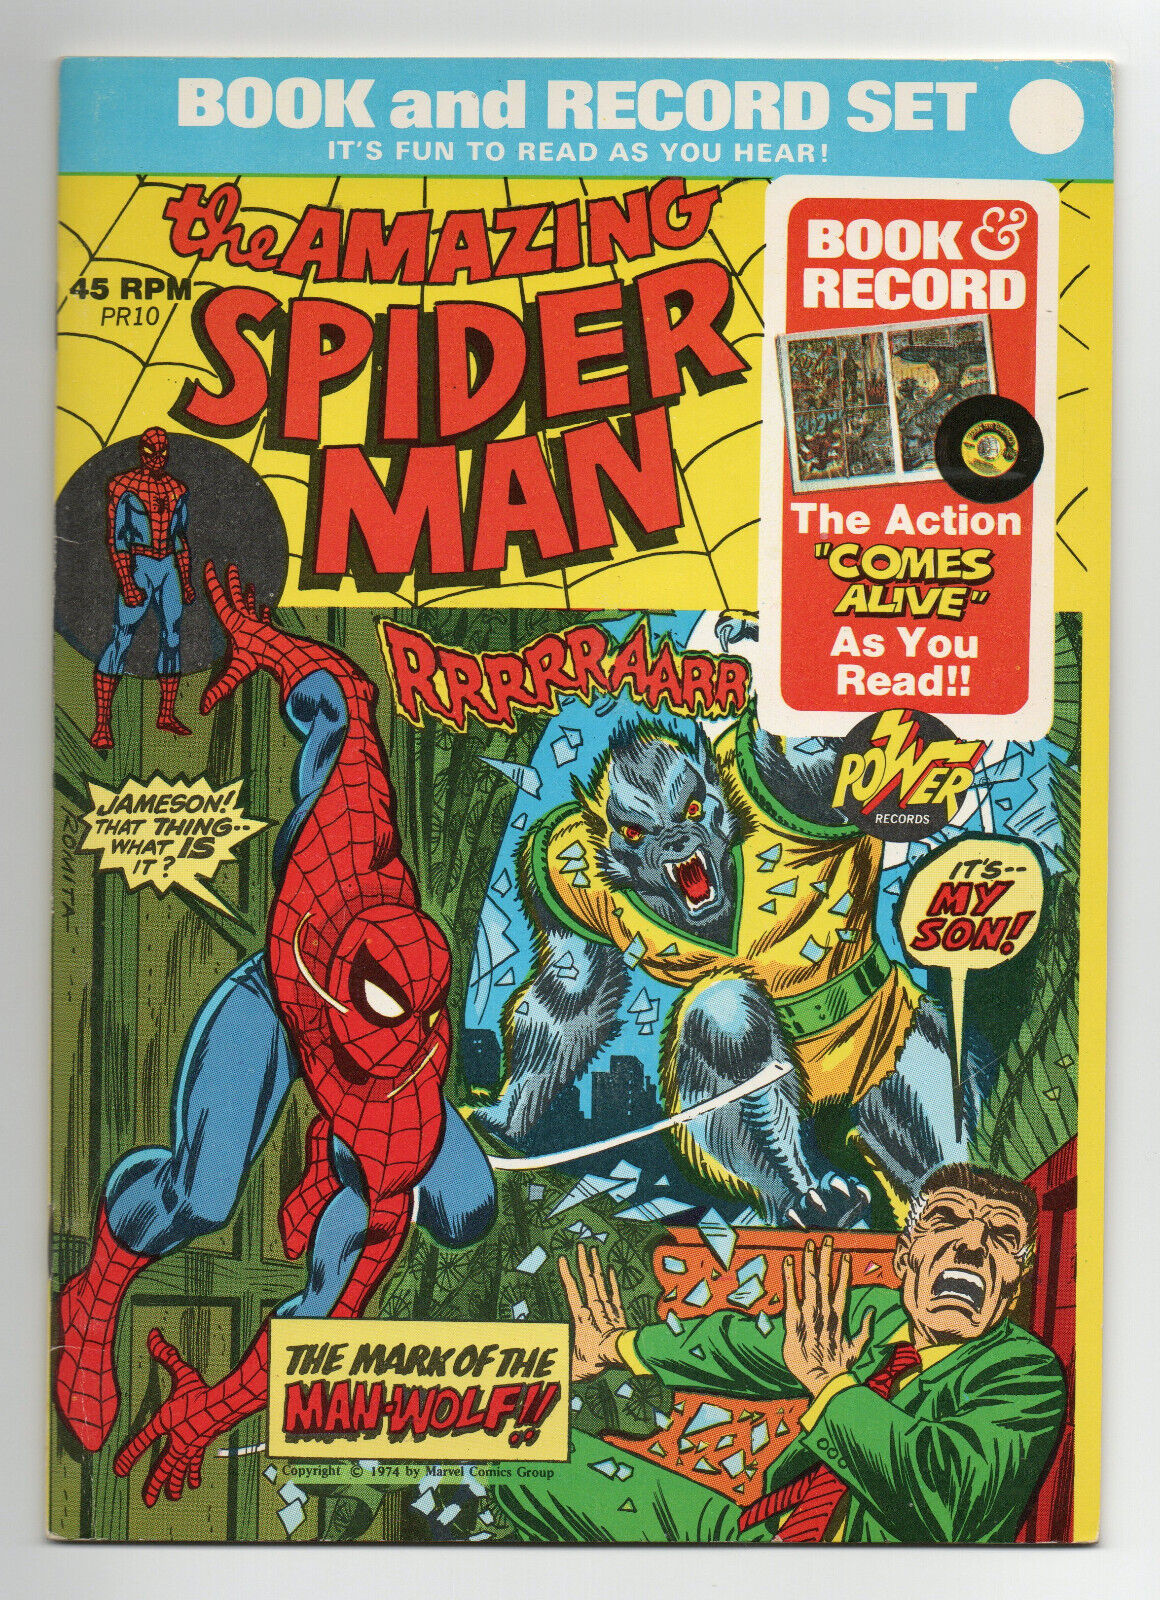 The Amazing Spider-Man Book & Record Vinyl 45 RPM Mark of the Man-Wolf 1974 PR10